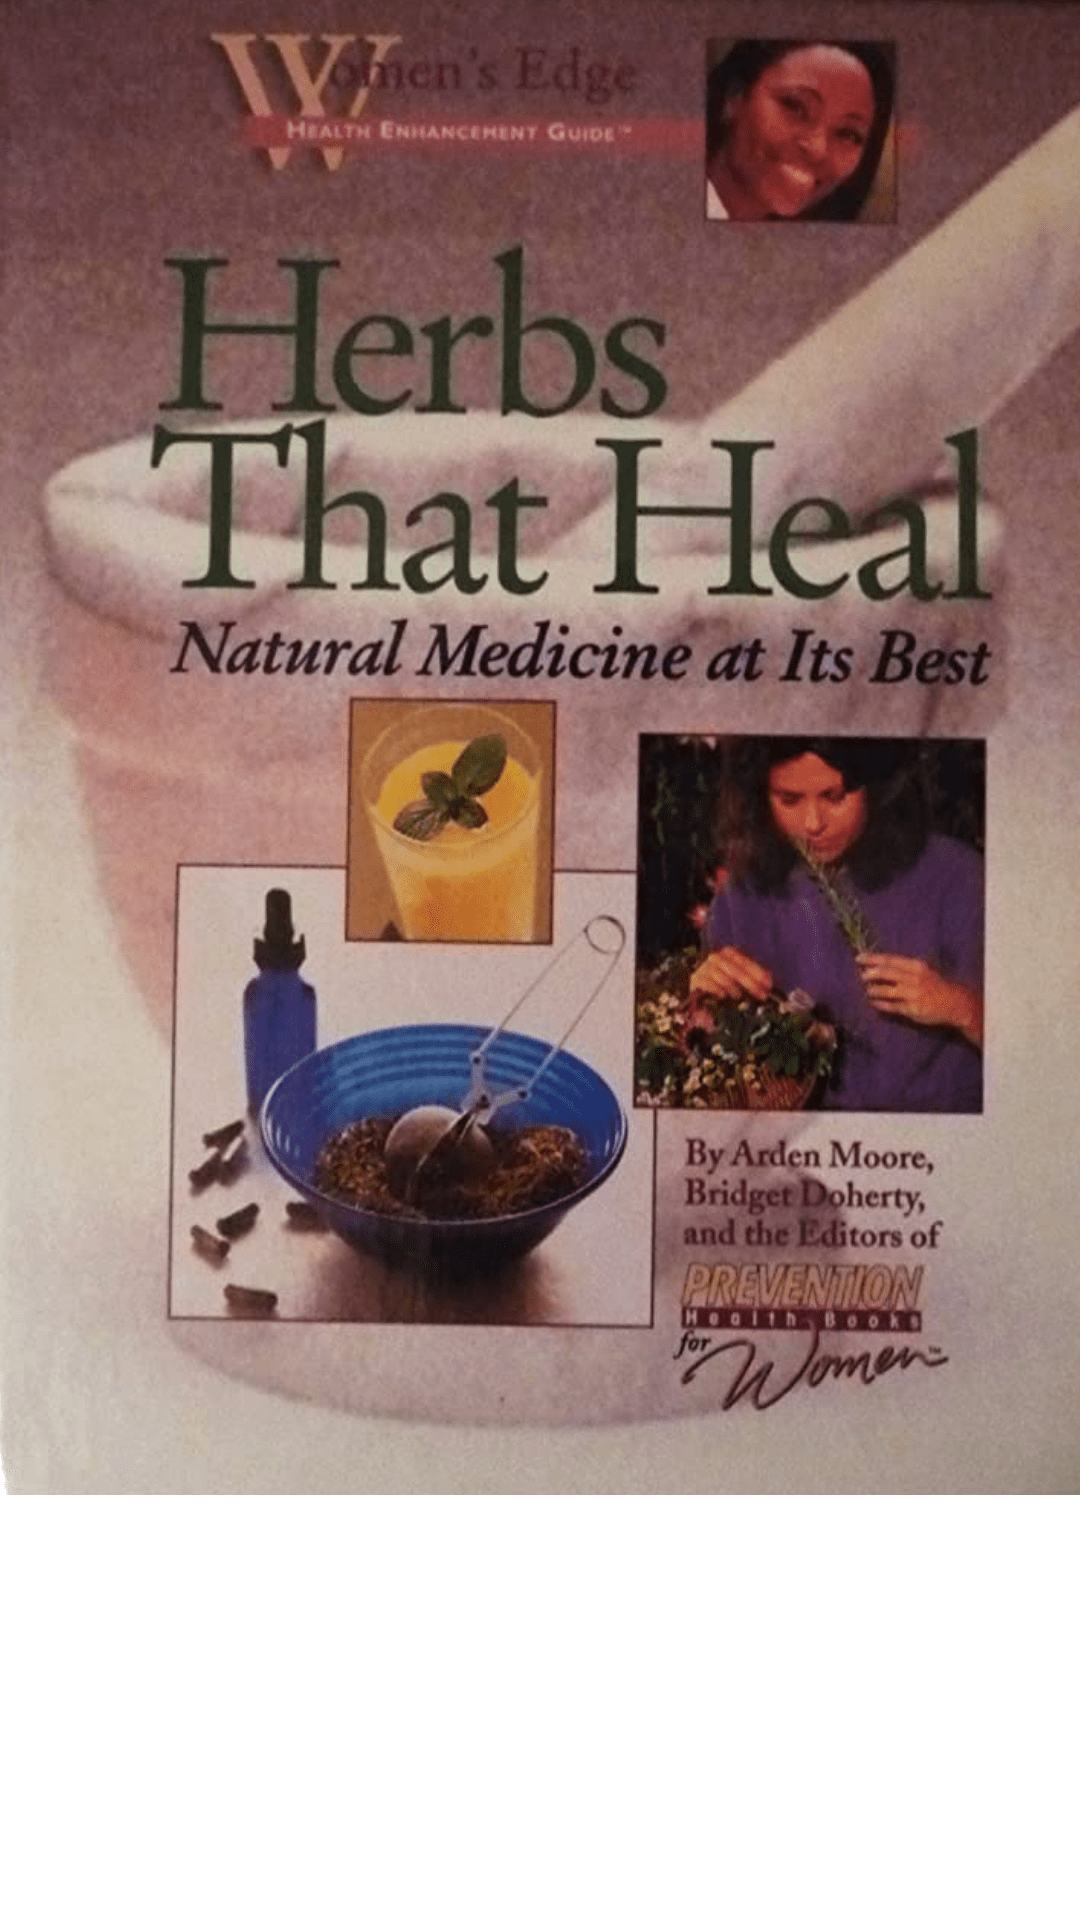 Herbs That Heal: Natural Medicine at Its Best (Women's Edge Health Enhancement Guide)